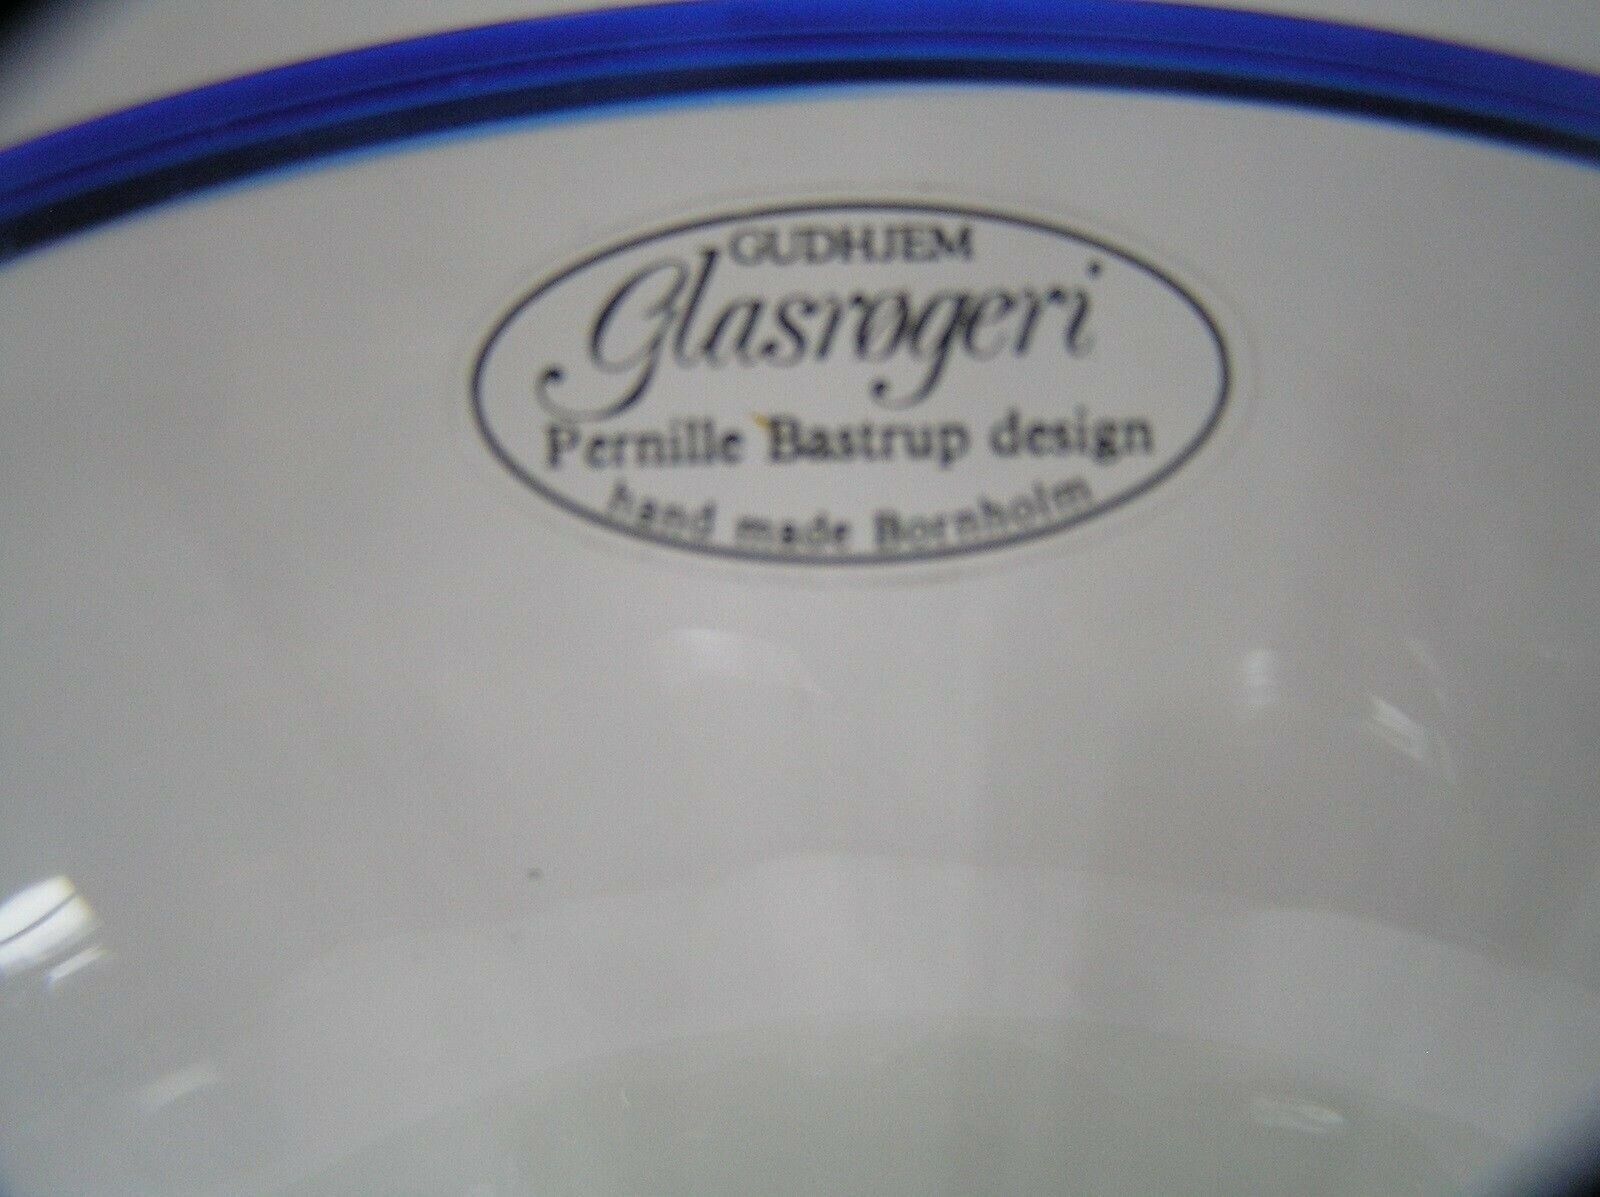 Glas skål, Pernille Bastrup